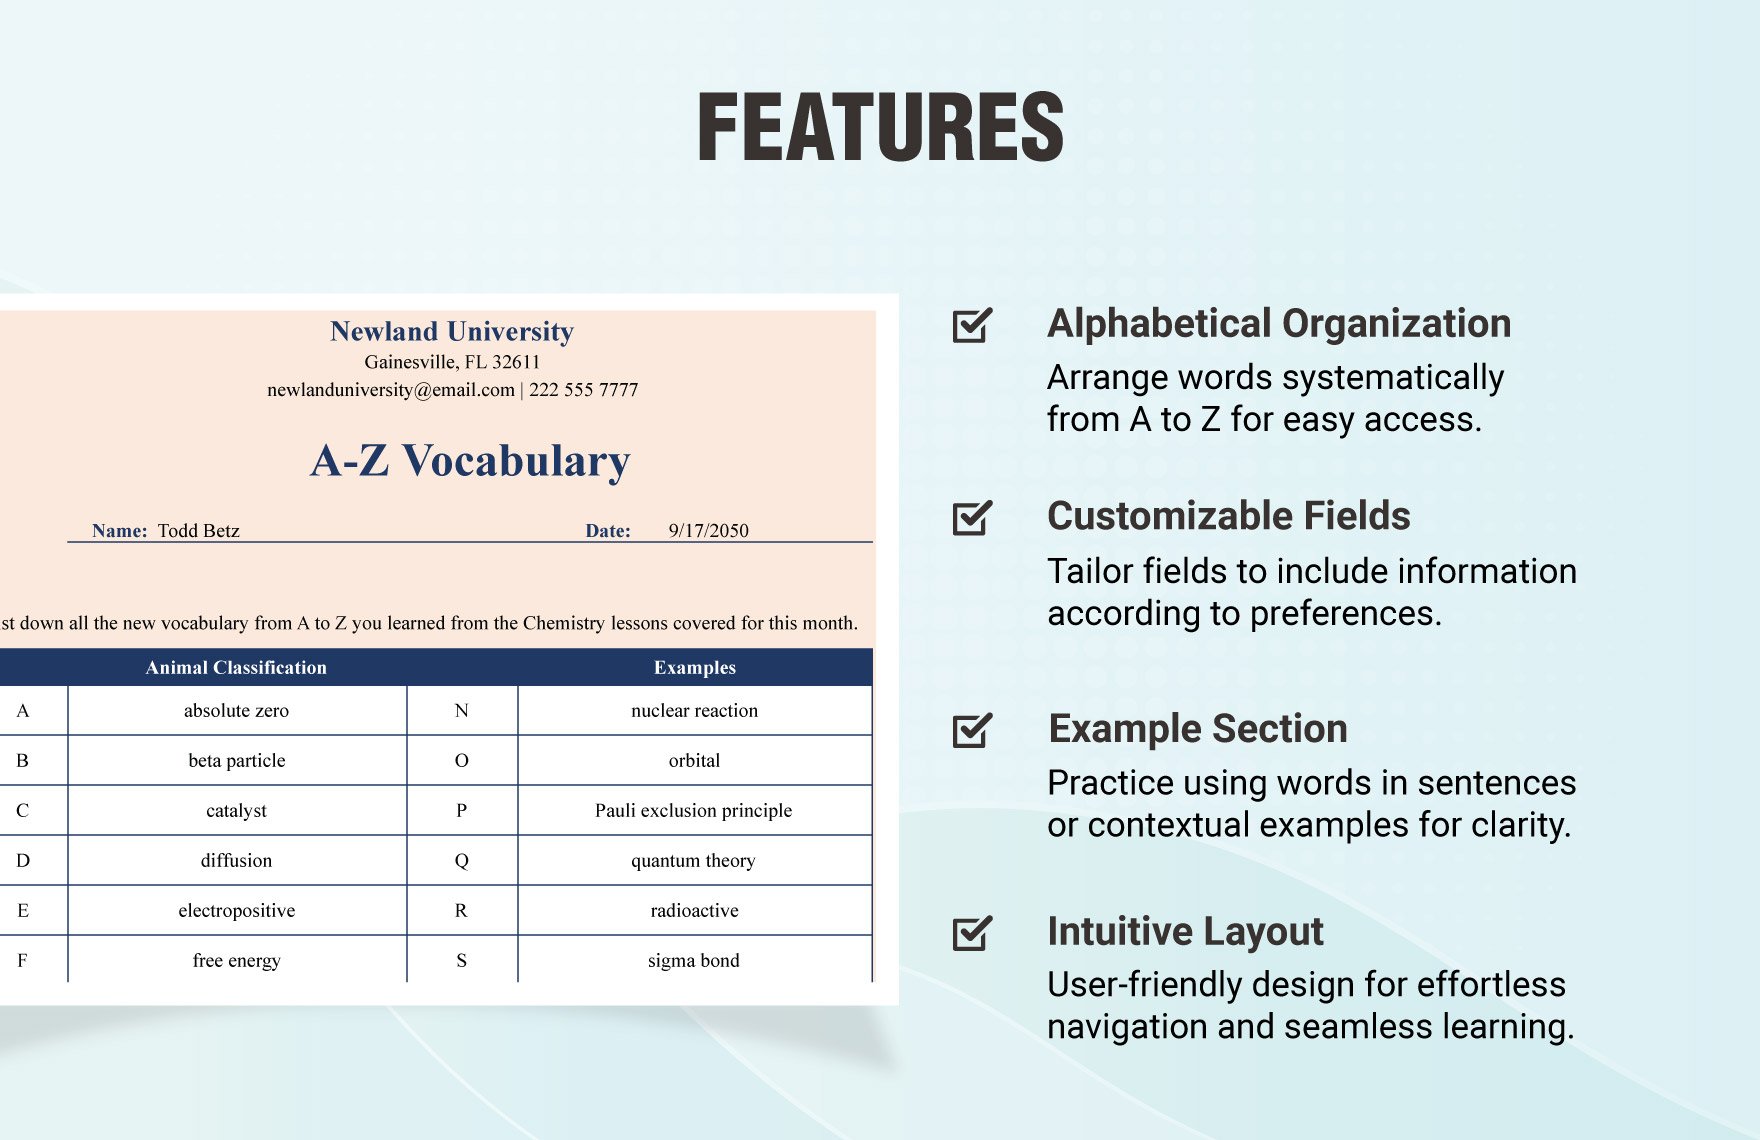 Vocabulary A-Z Worksheet Template